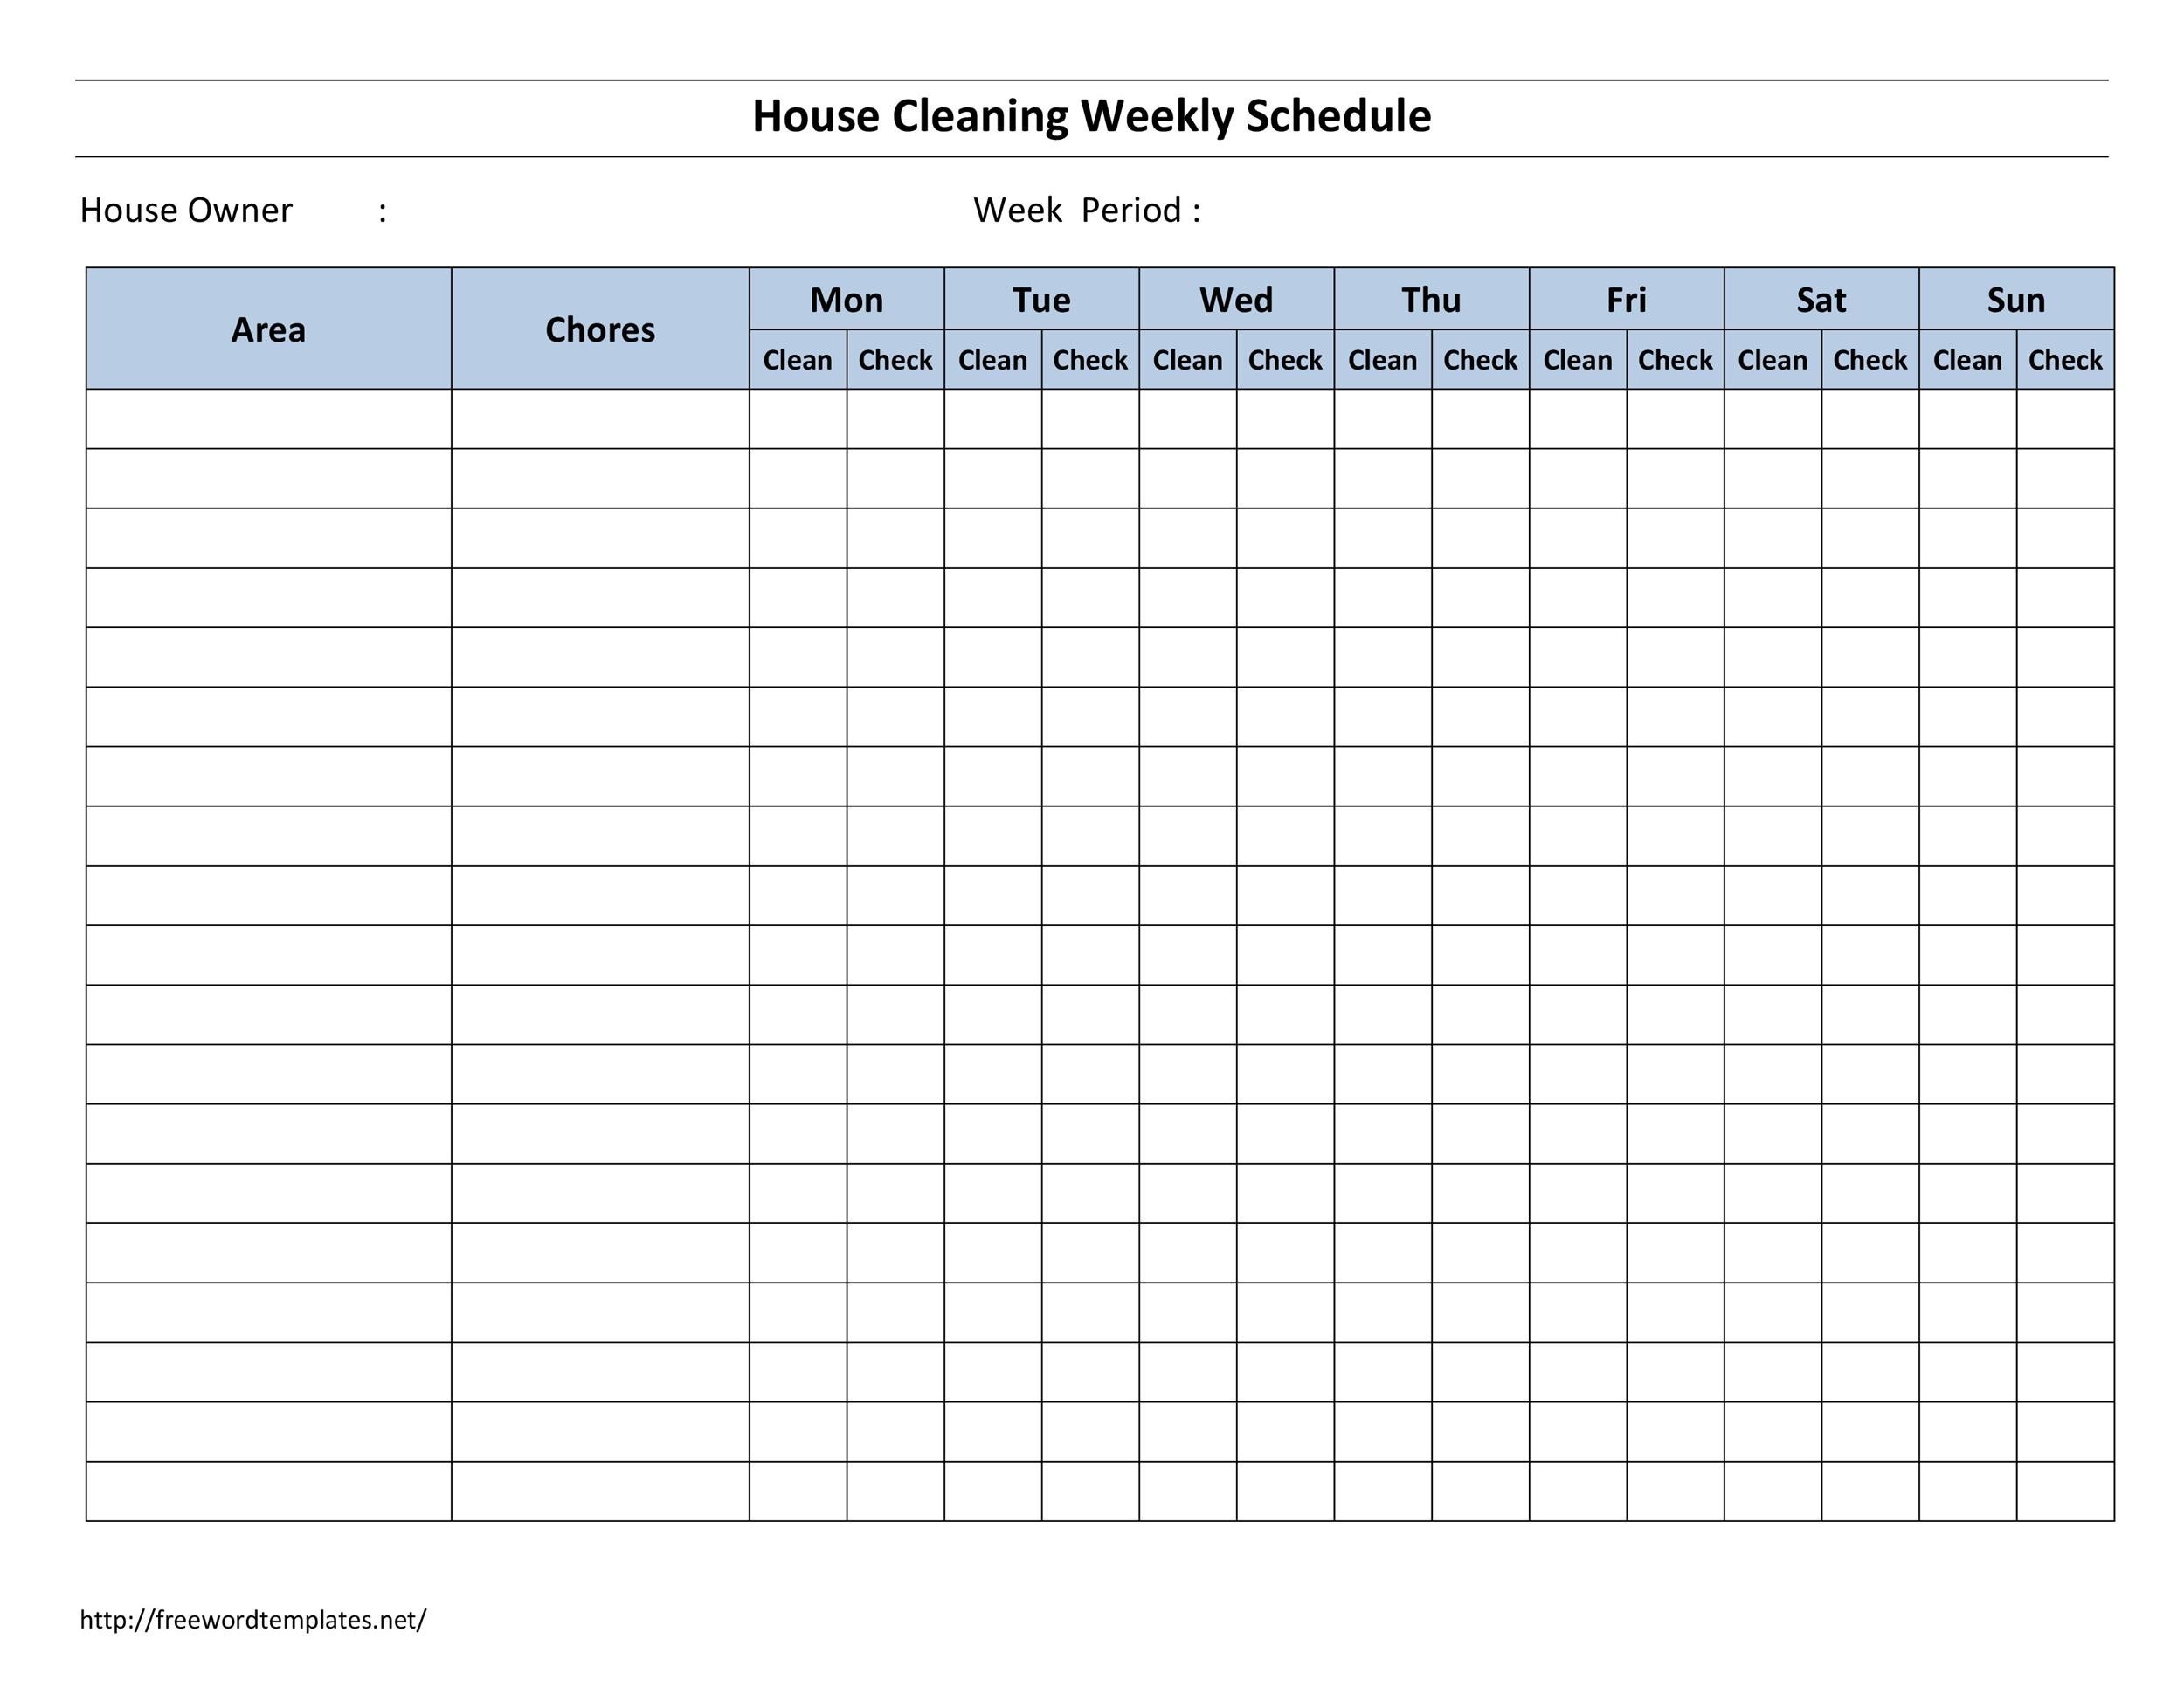 Household Chore Chart Template